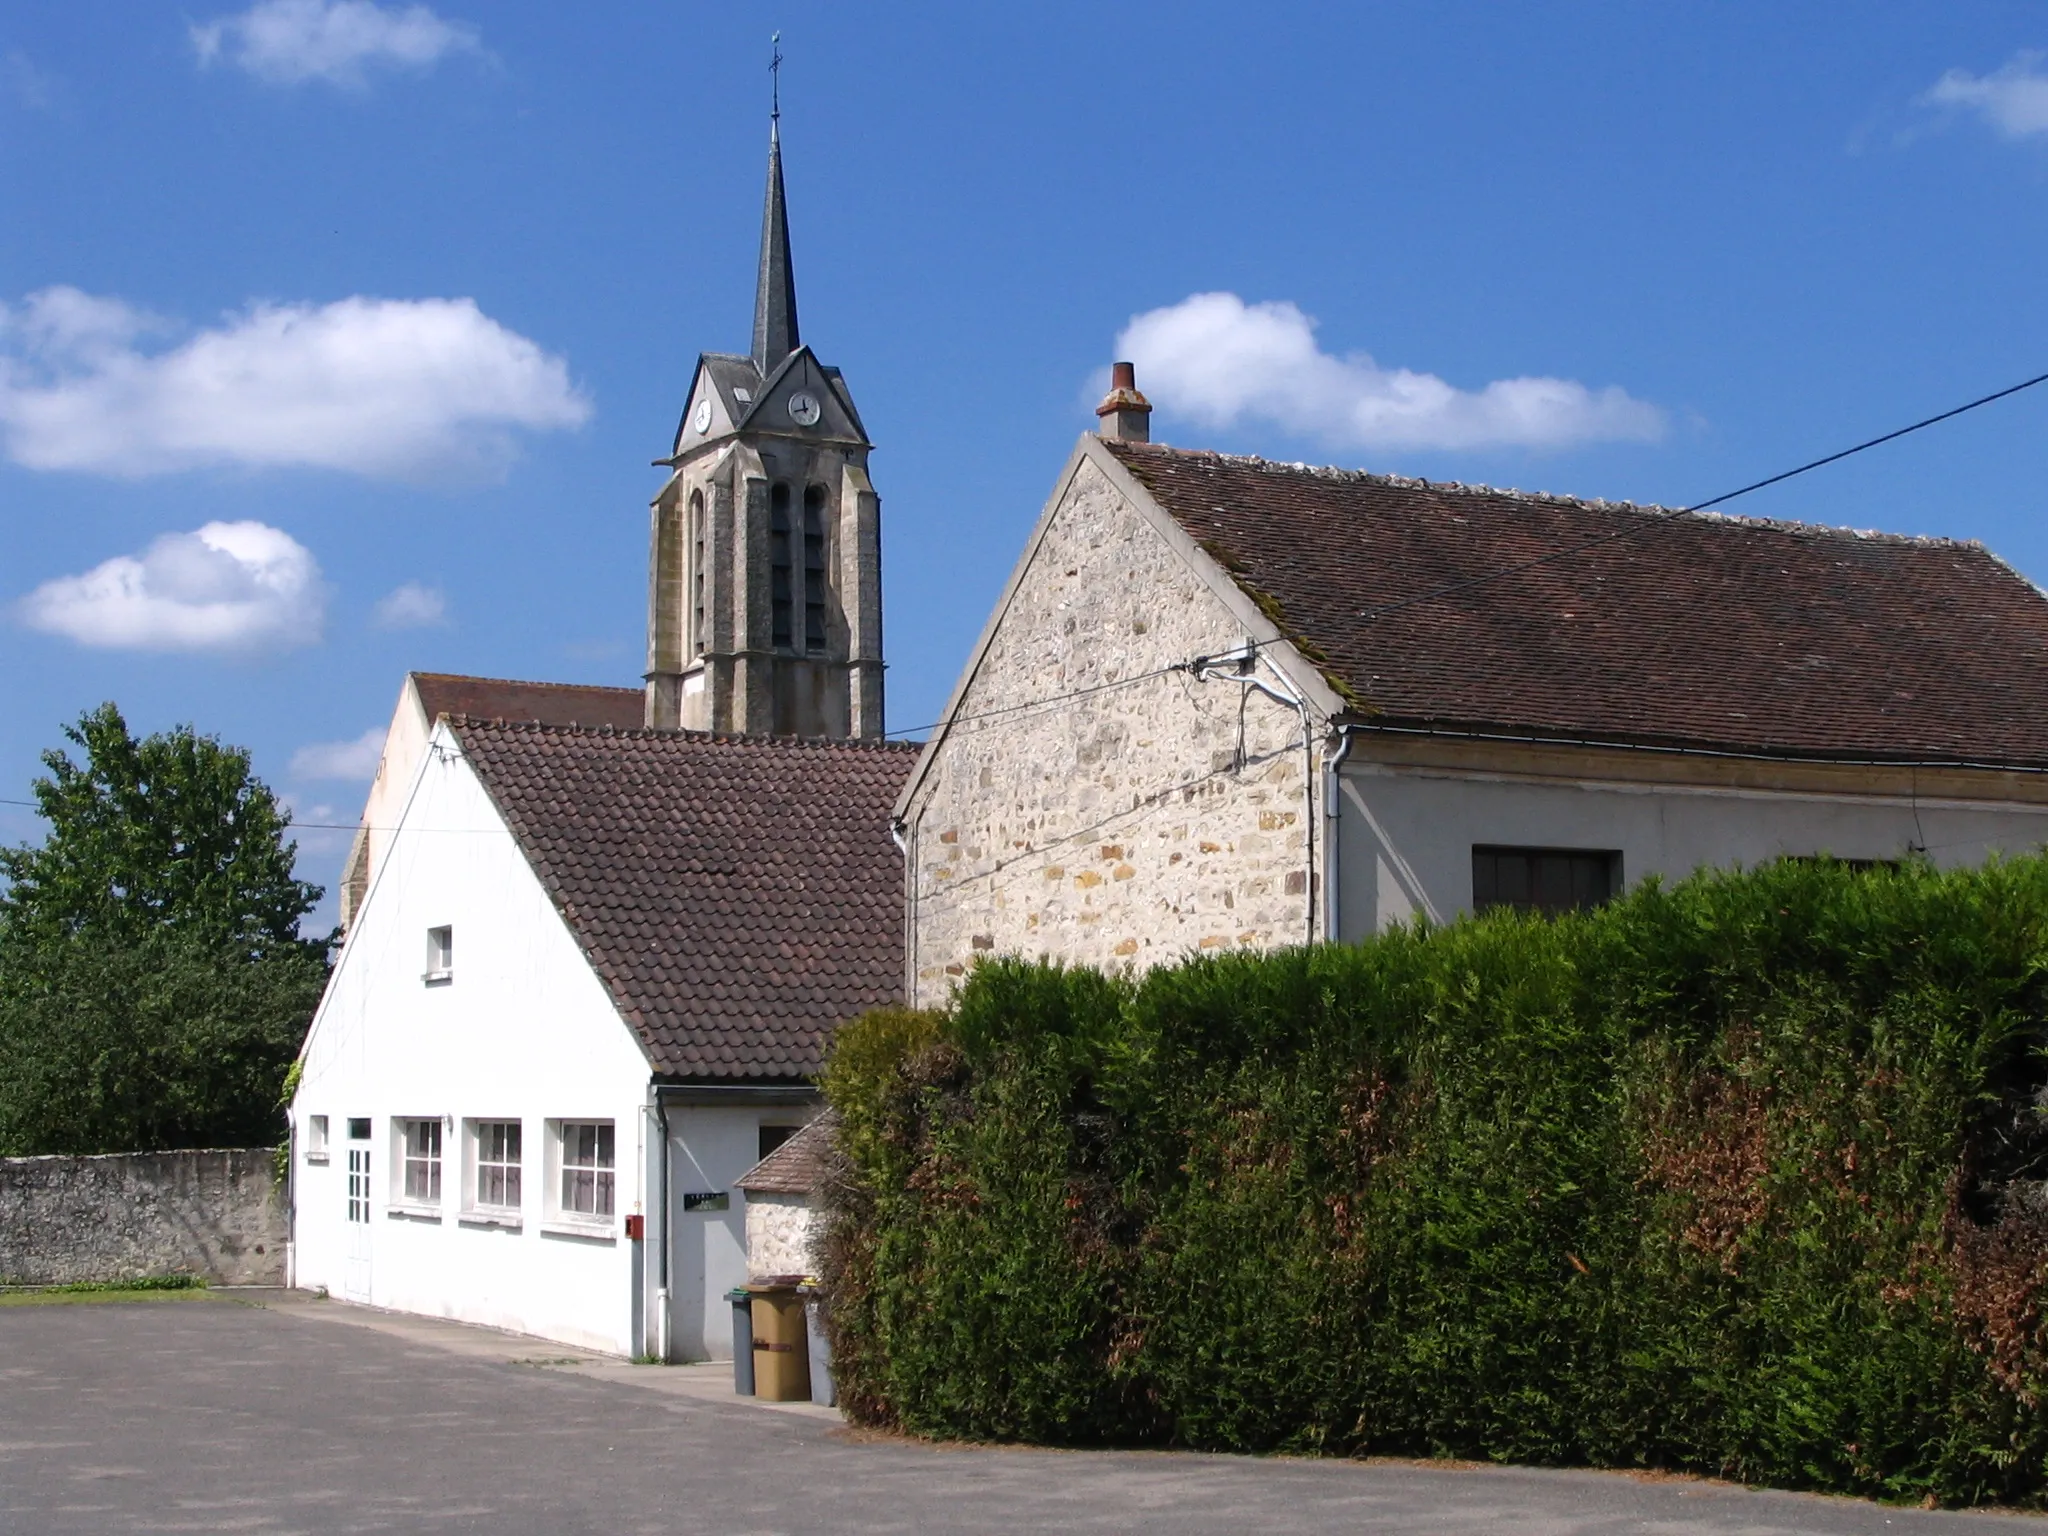 Photo showing: The church of Vernou-sur-Seine, in Vernou-la-Celle-sur-Seine, Seine-et-Marne, France, seen from a street.